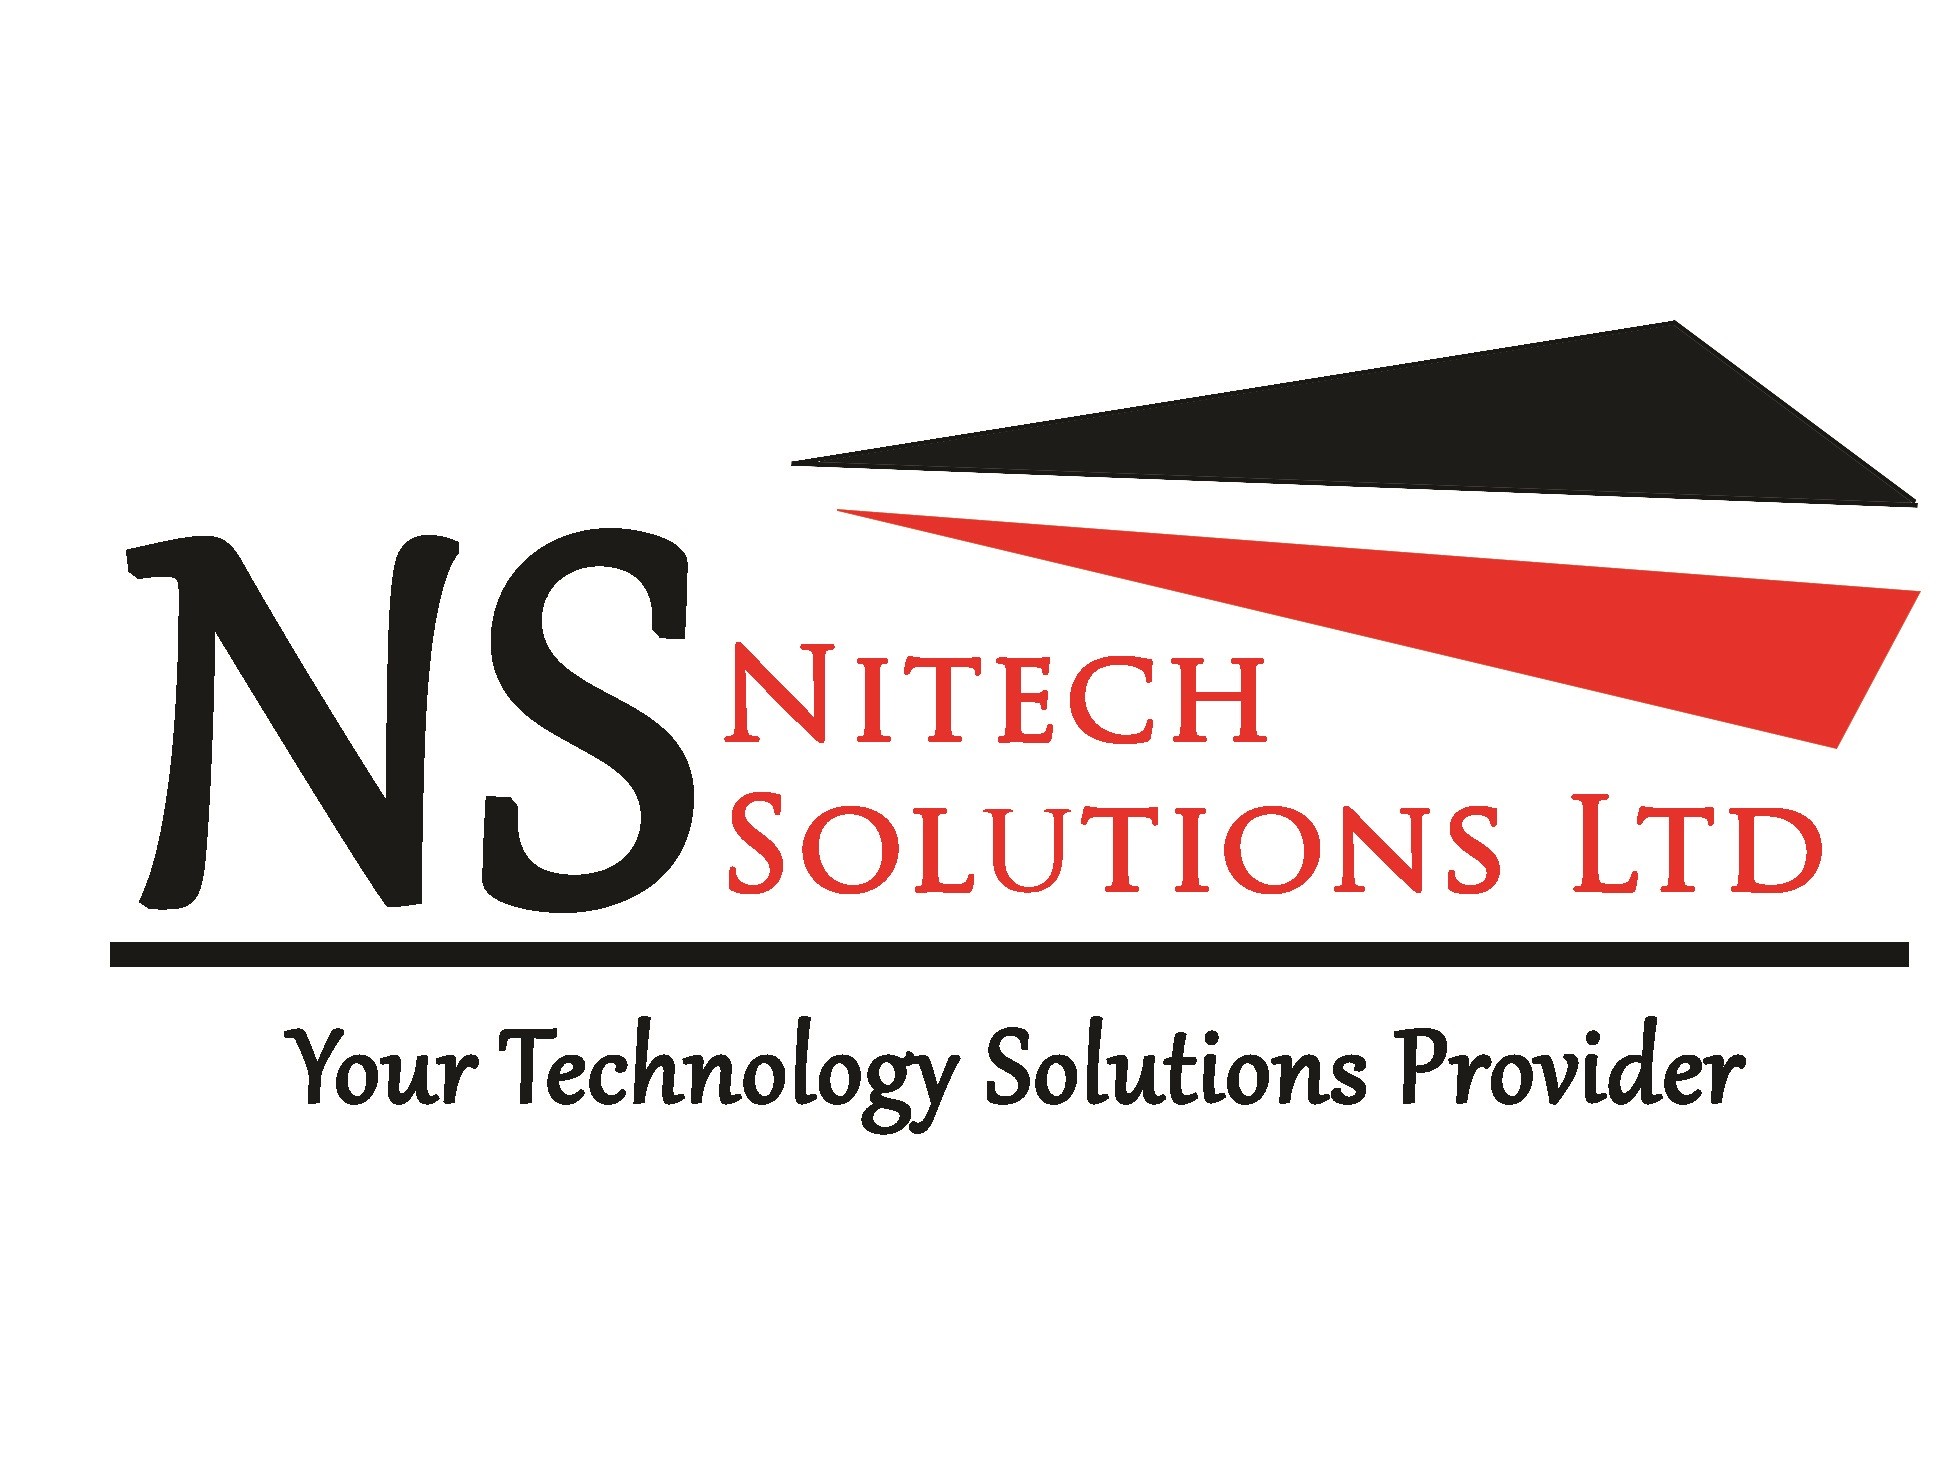 Nitech Solutions Ltd